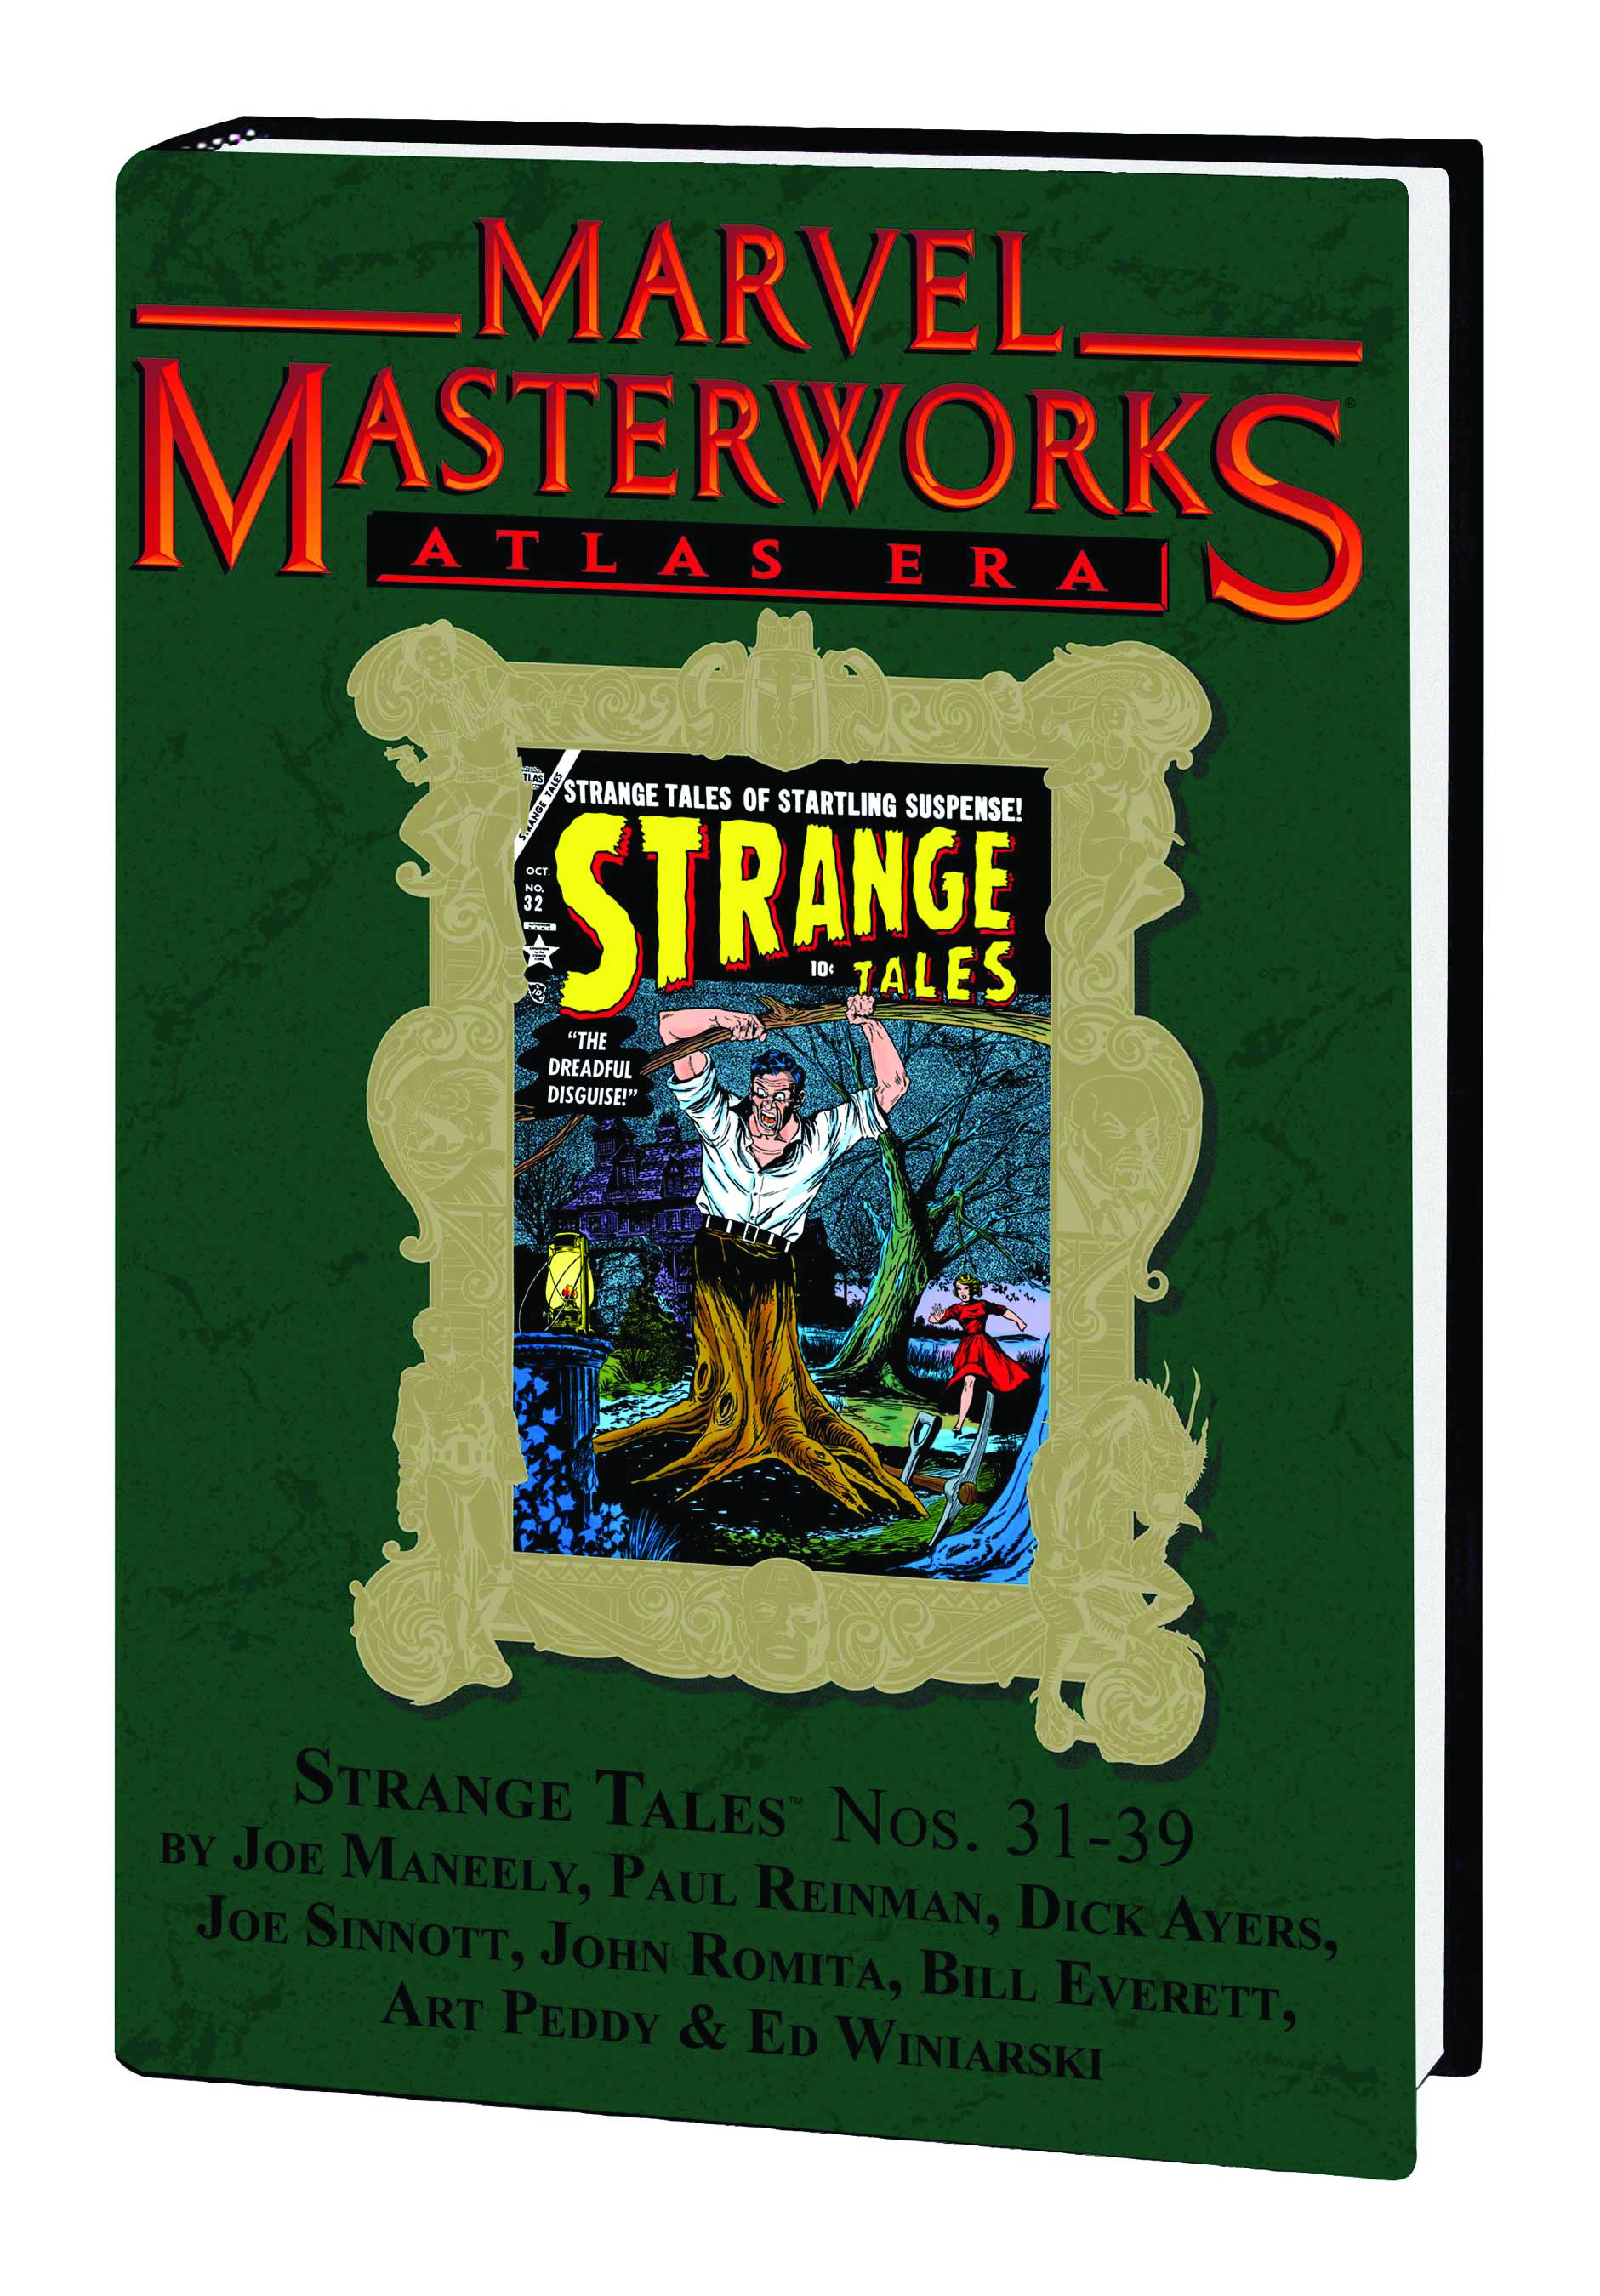 Marvel Masterworks Atlas Era Strange Tales Hardcover Volume 4 DM Edition 156